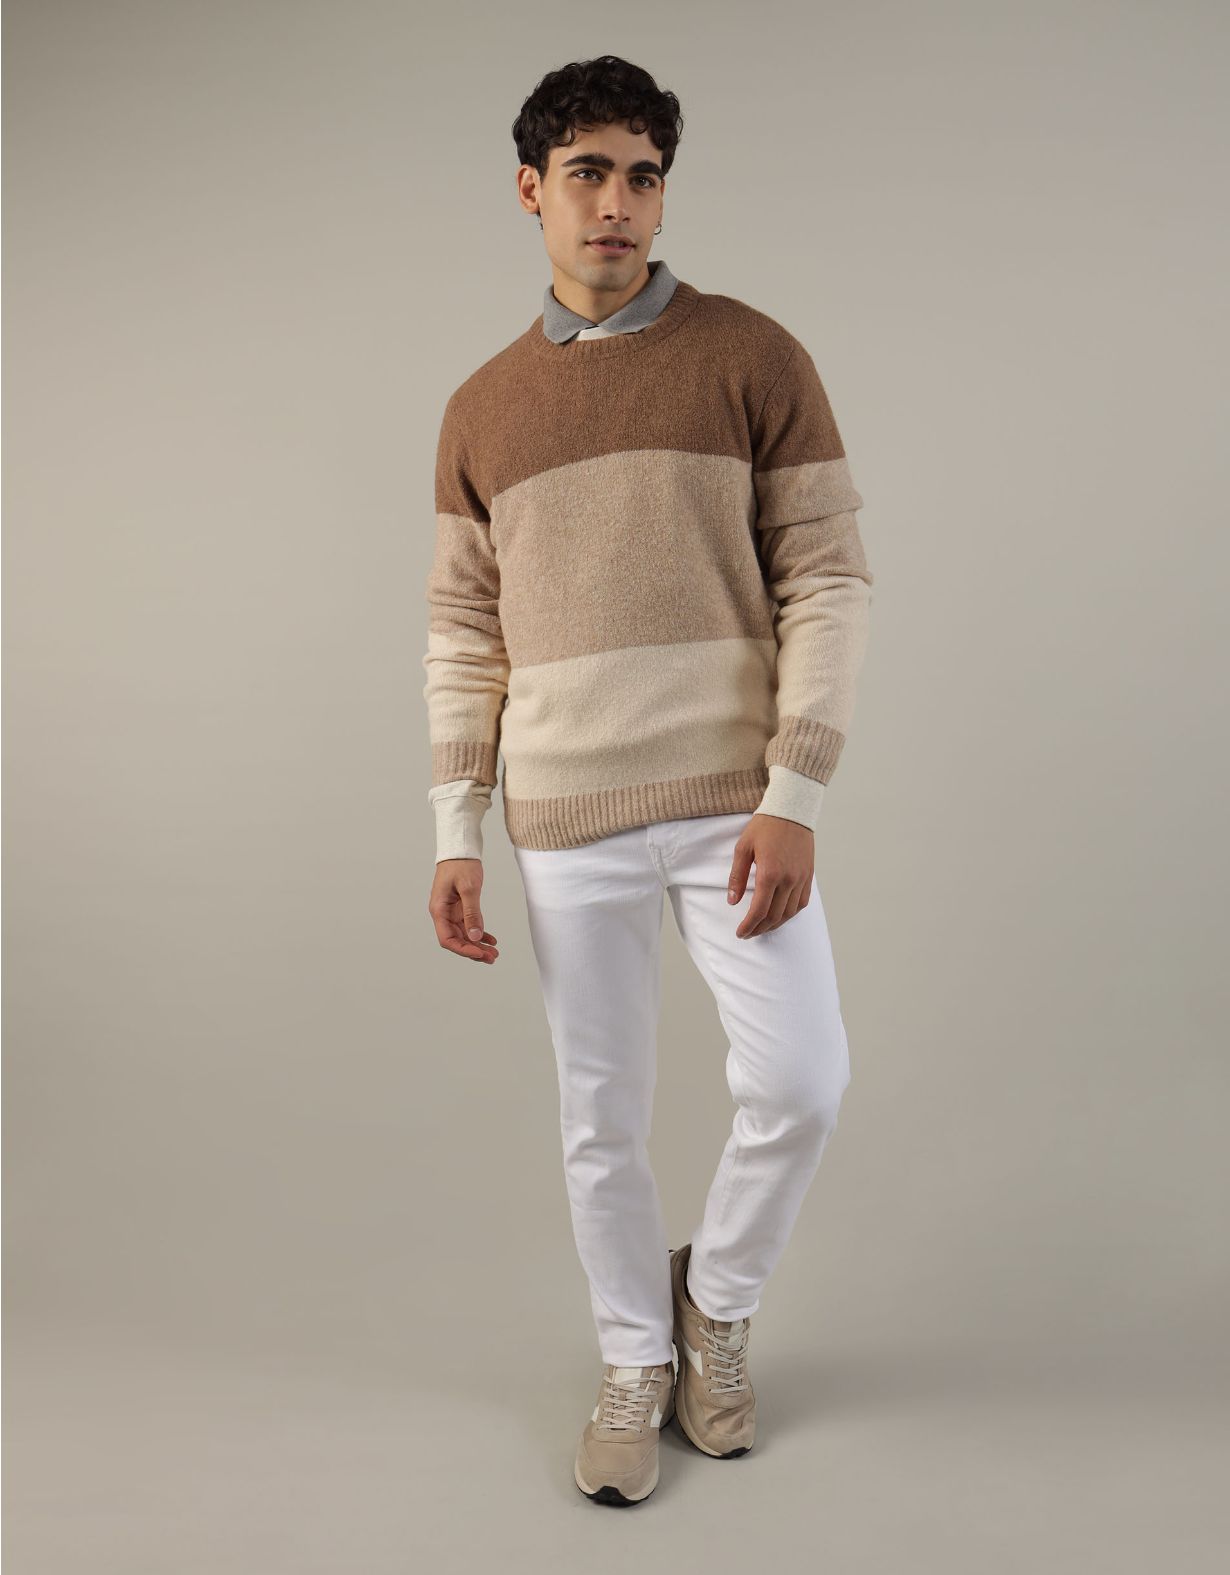 AE Crewneck Sweater